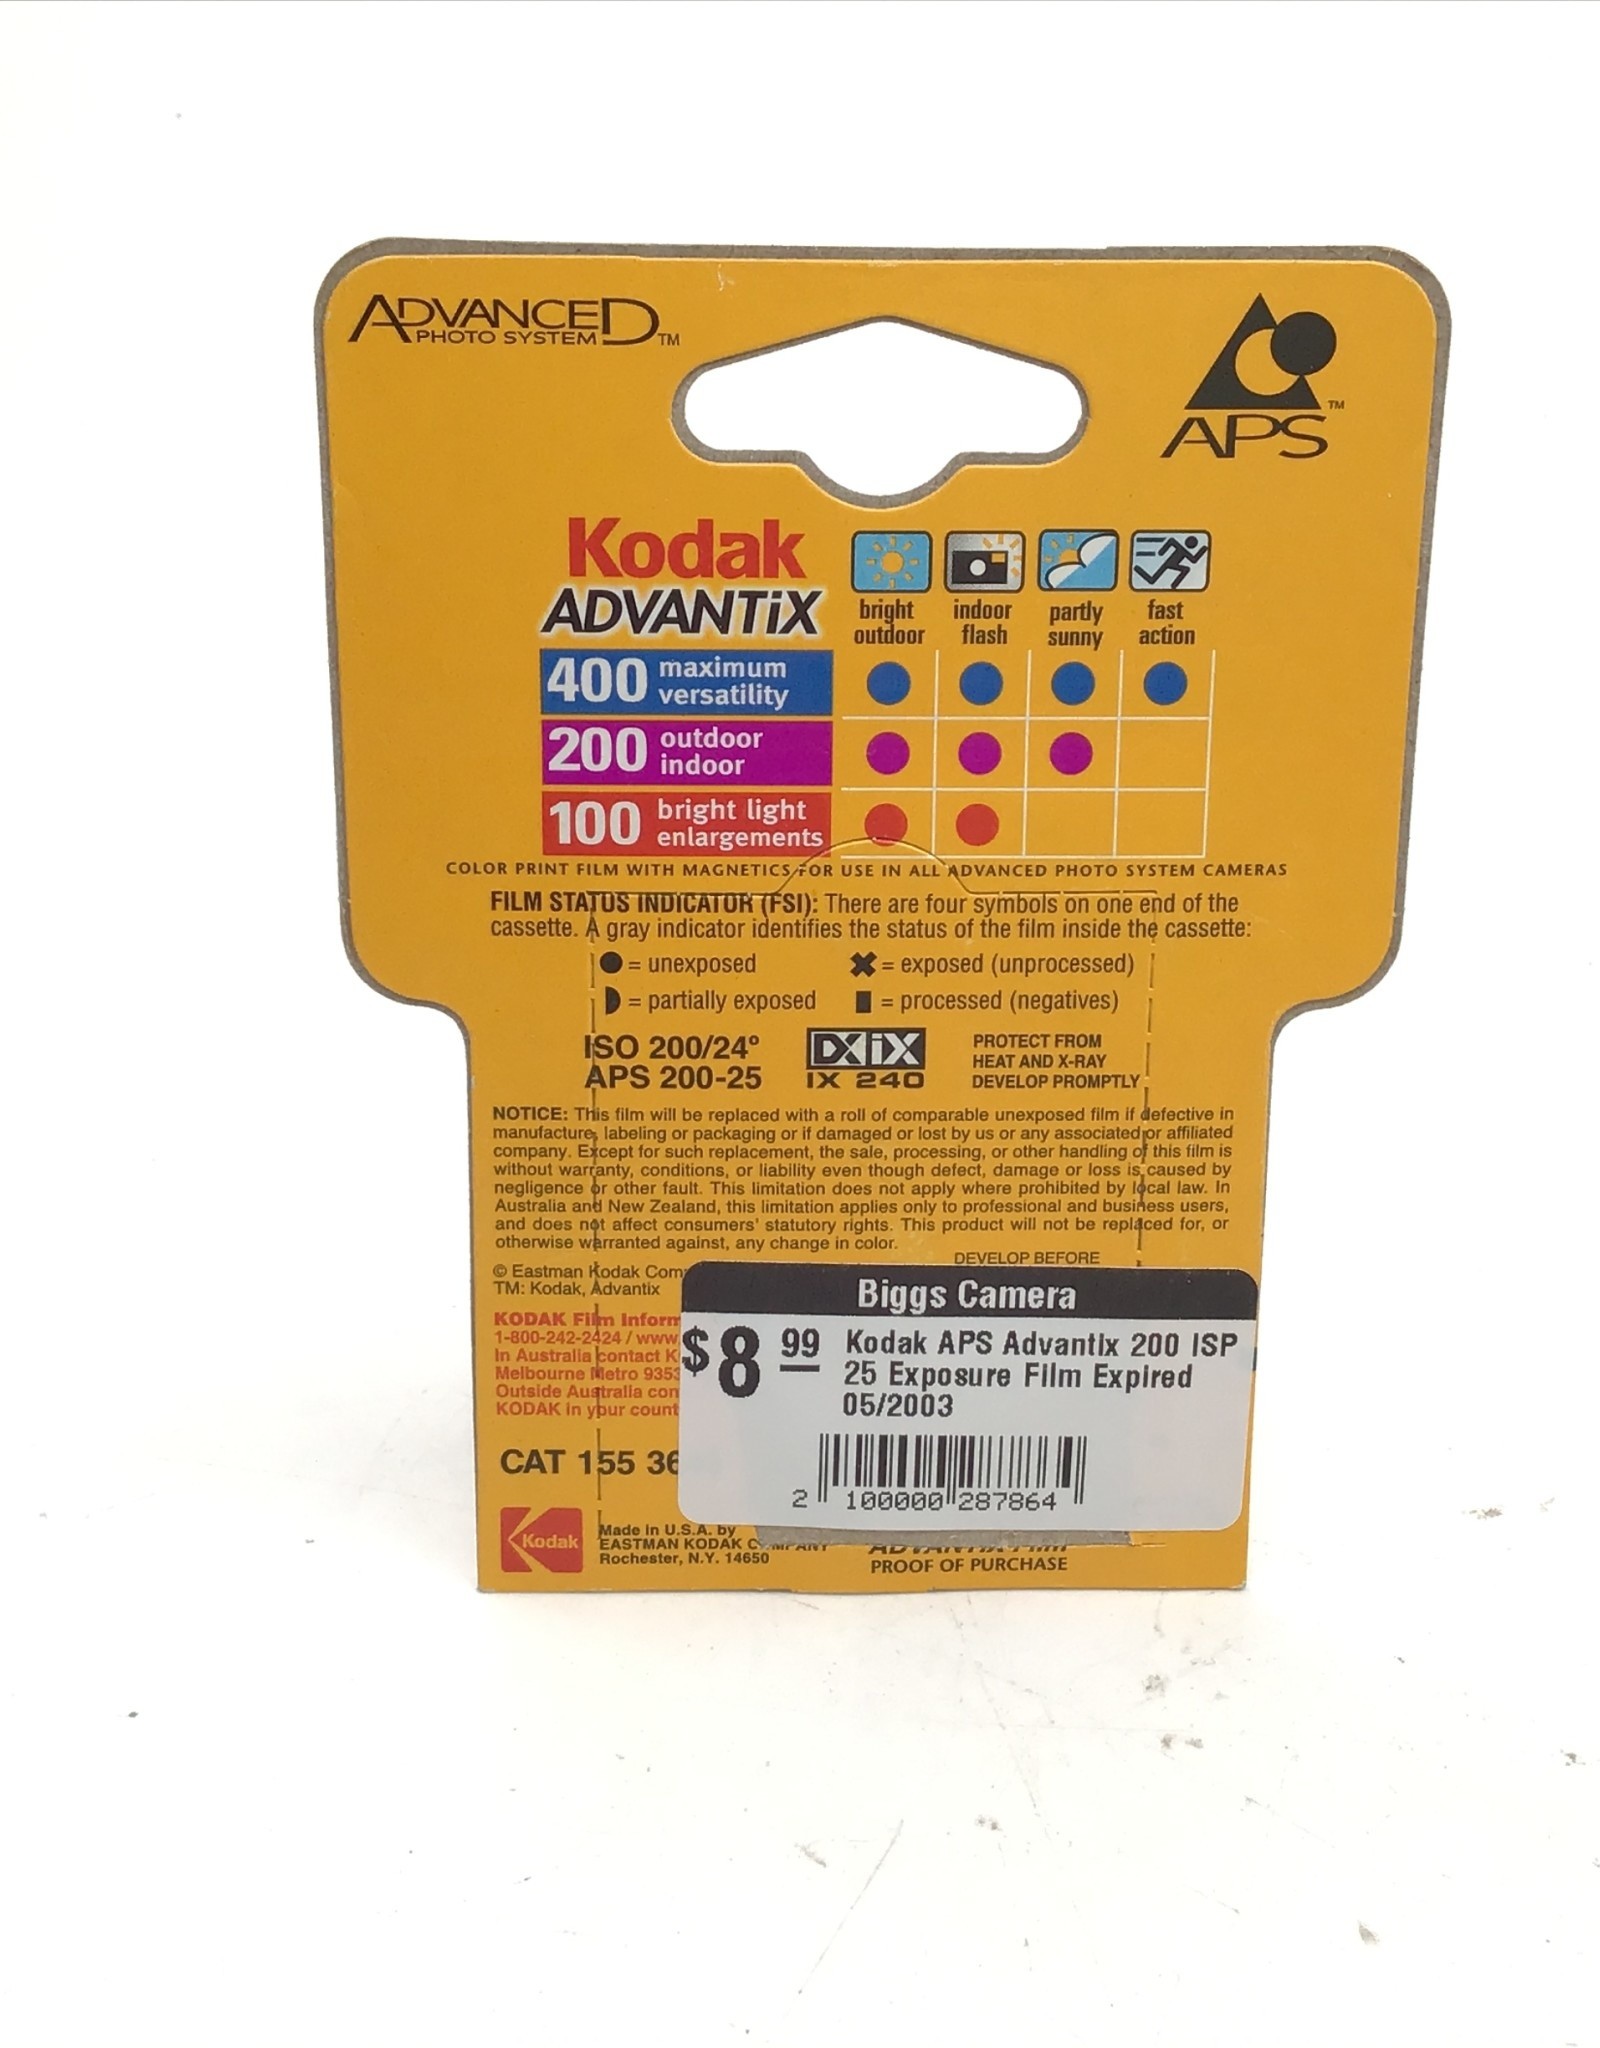 Kodak APS Advantix 200 ISP 25 Exposure Film Expired 05/2003